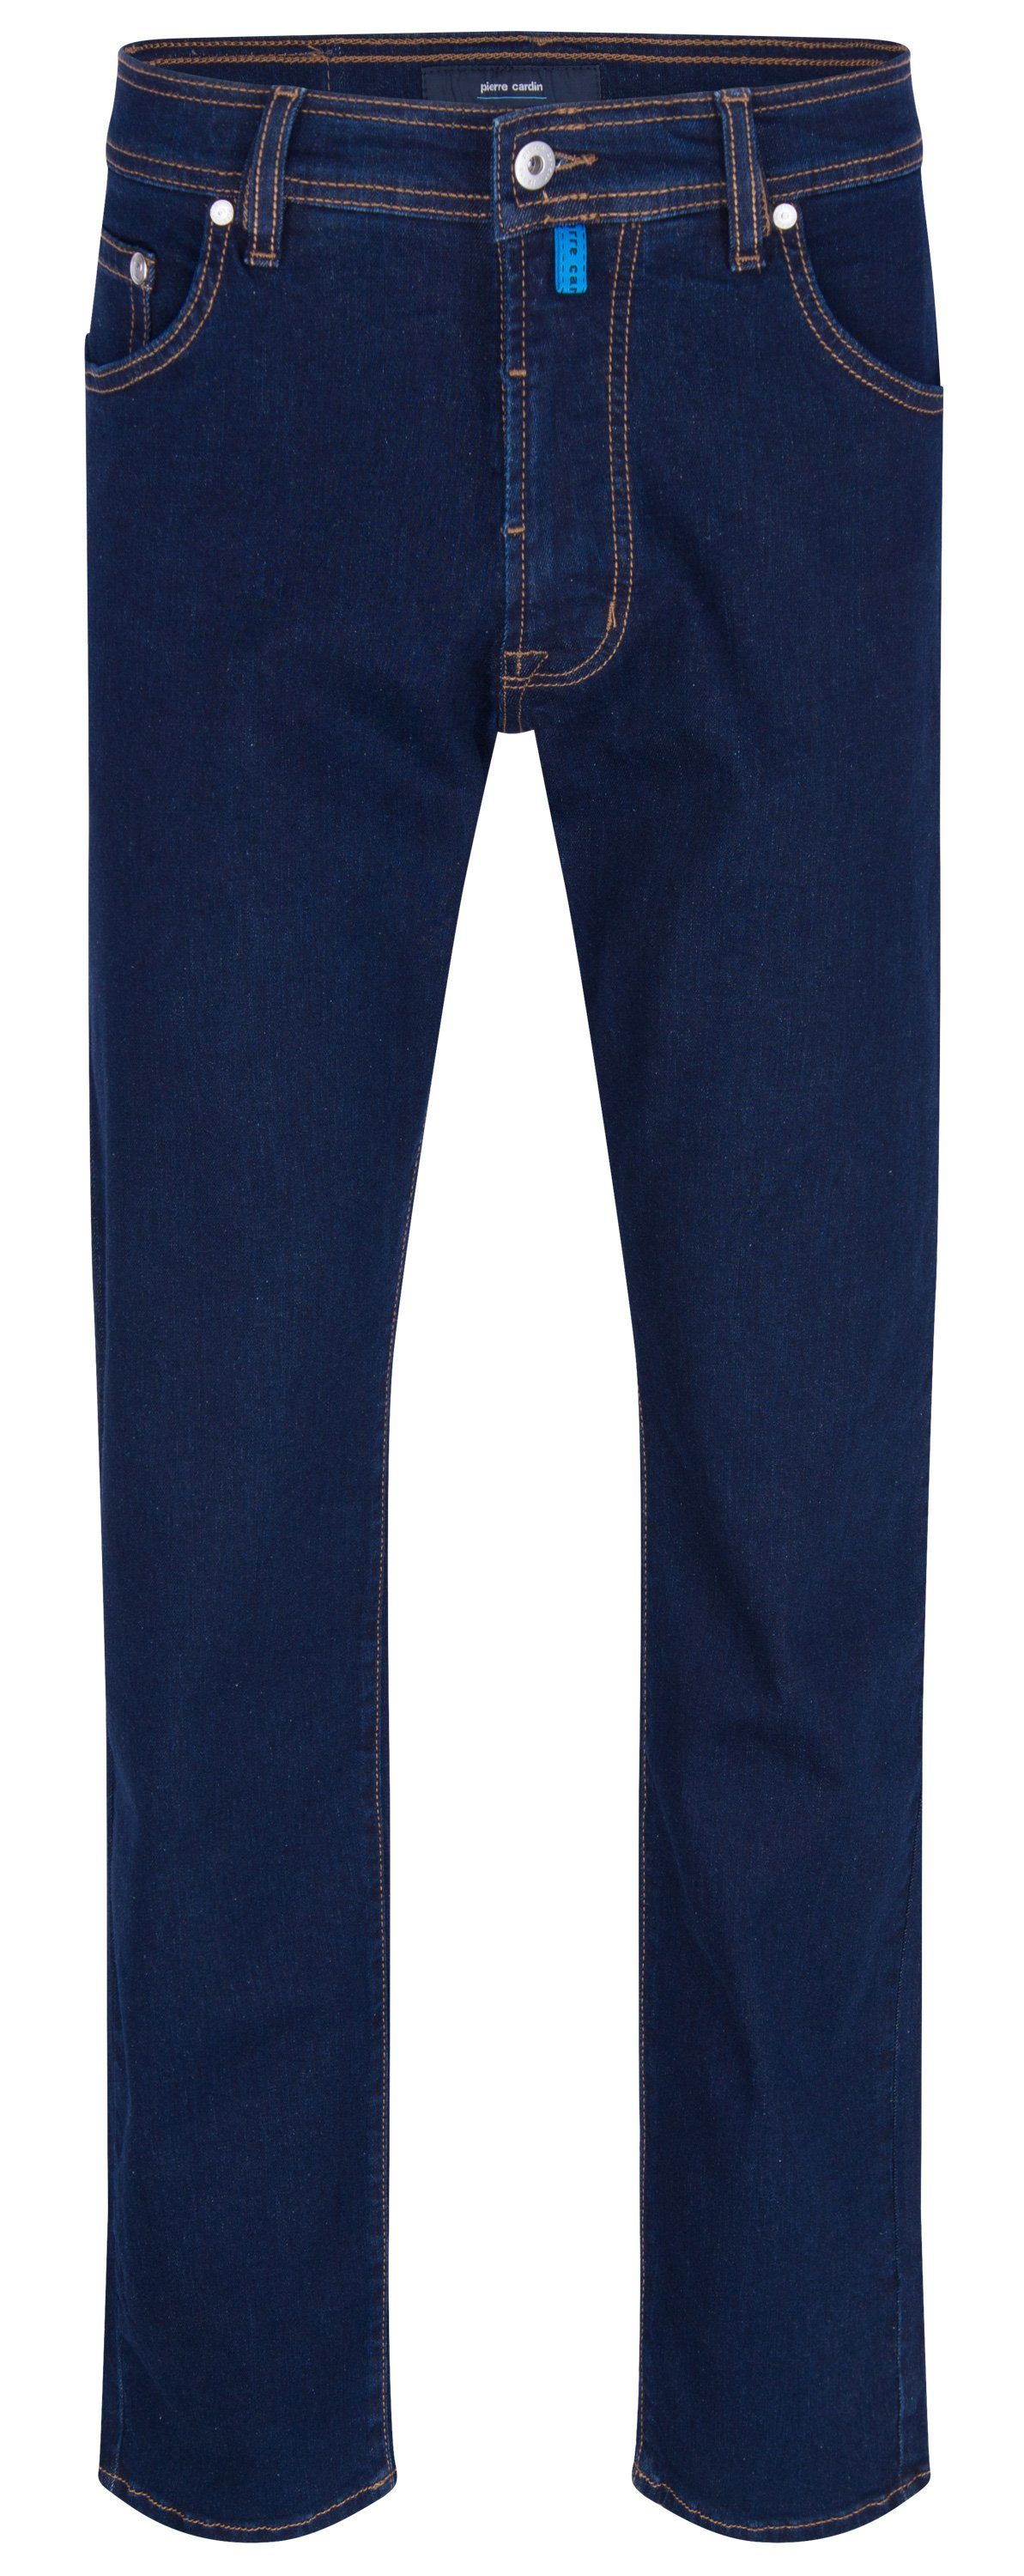 Pierre Cardin 5-Pocket-Jeans PIERRE CARDIN DEAUVILLE dark blue stonewash 31960 7106.6811 - CLIMA